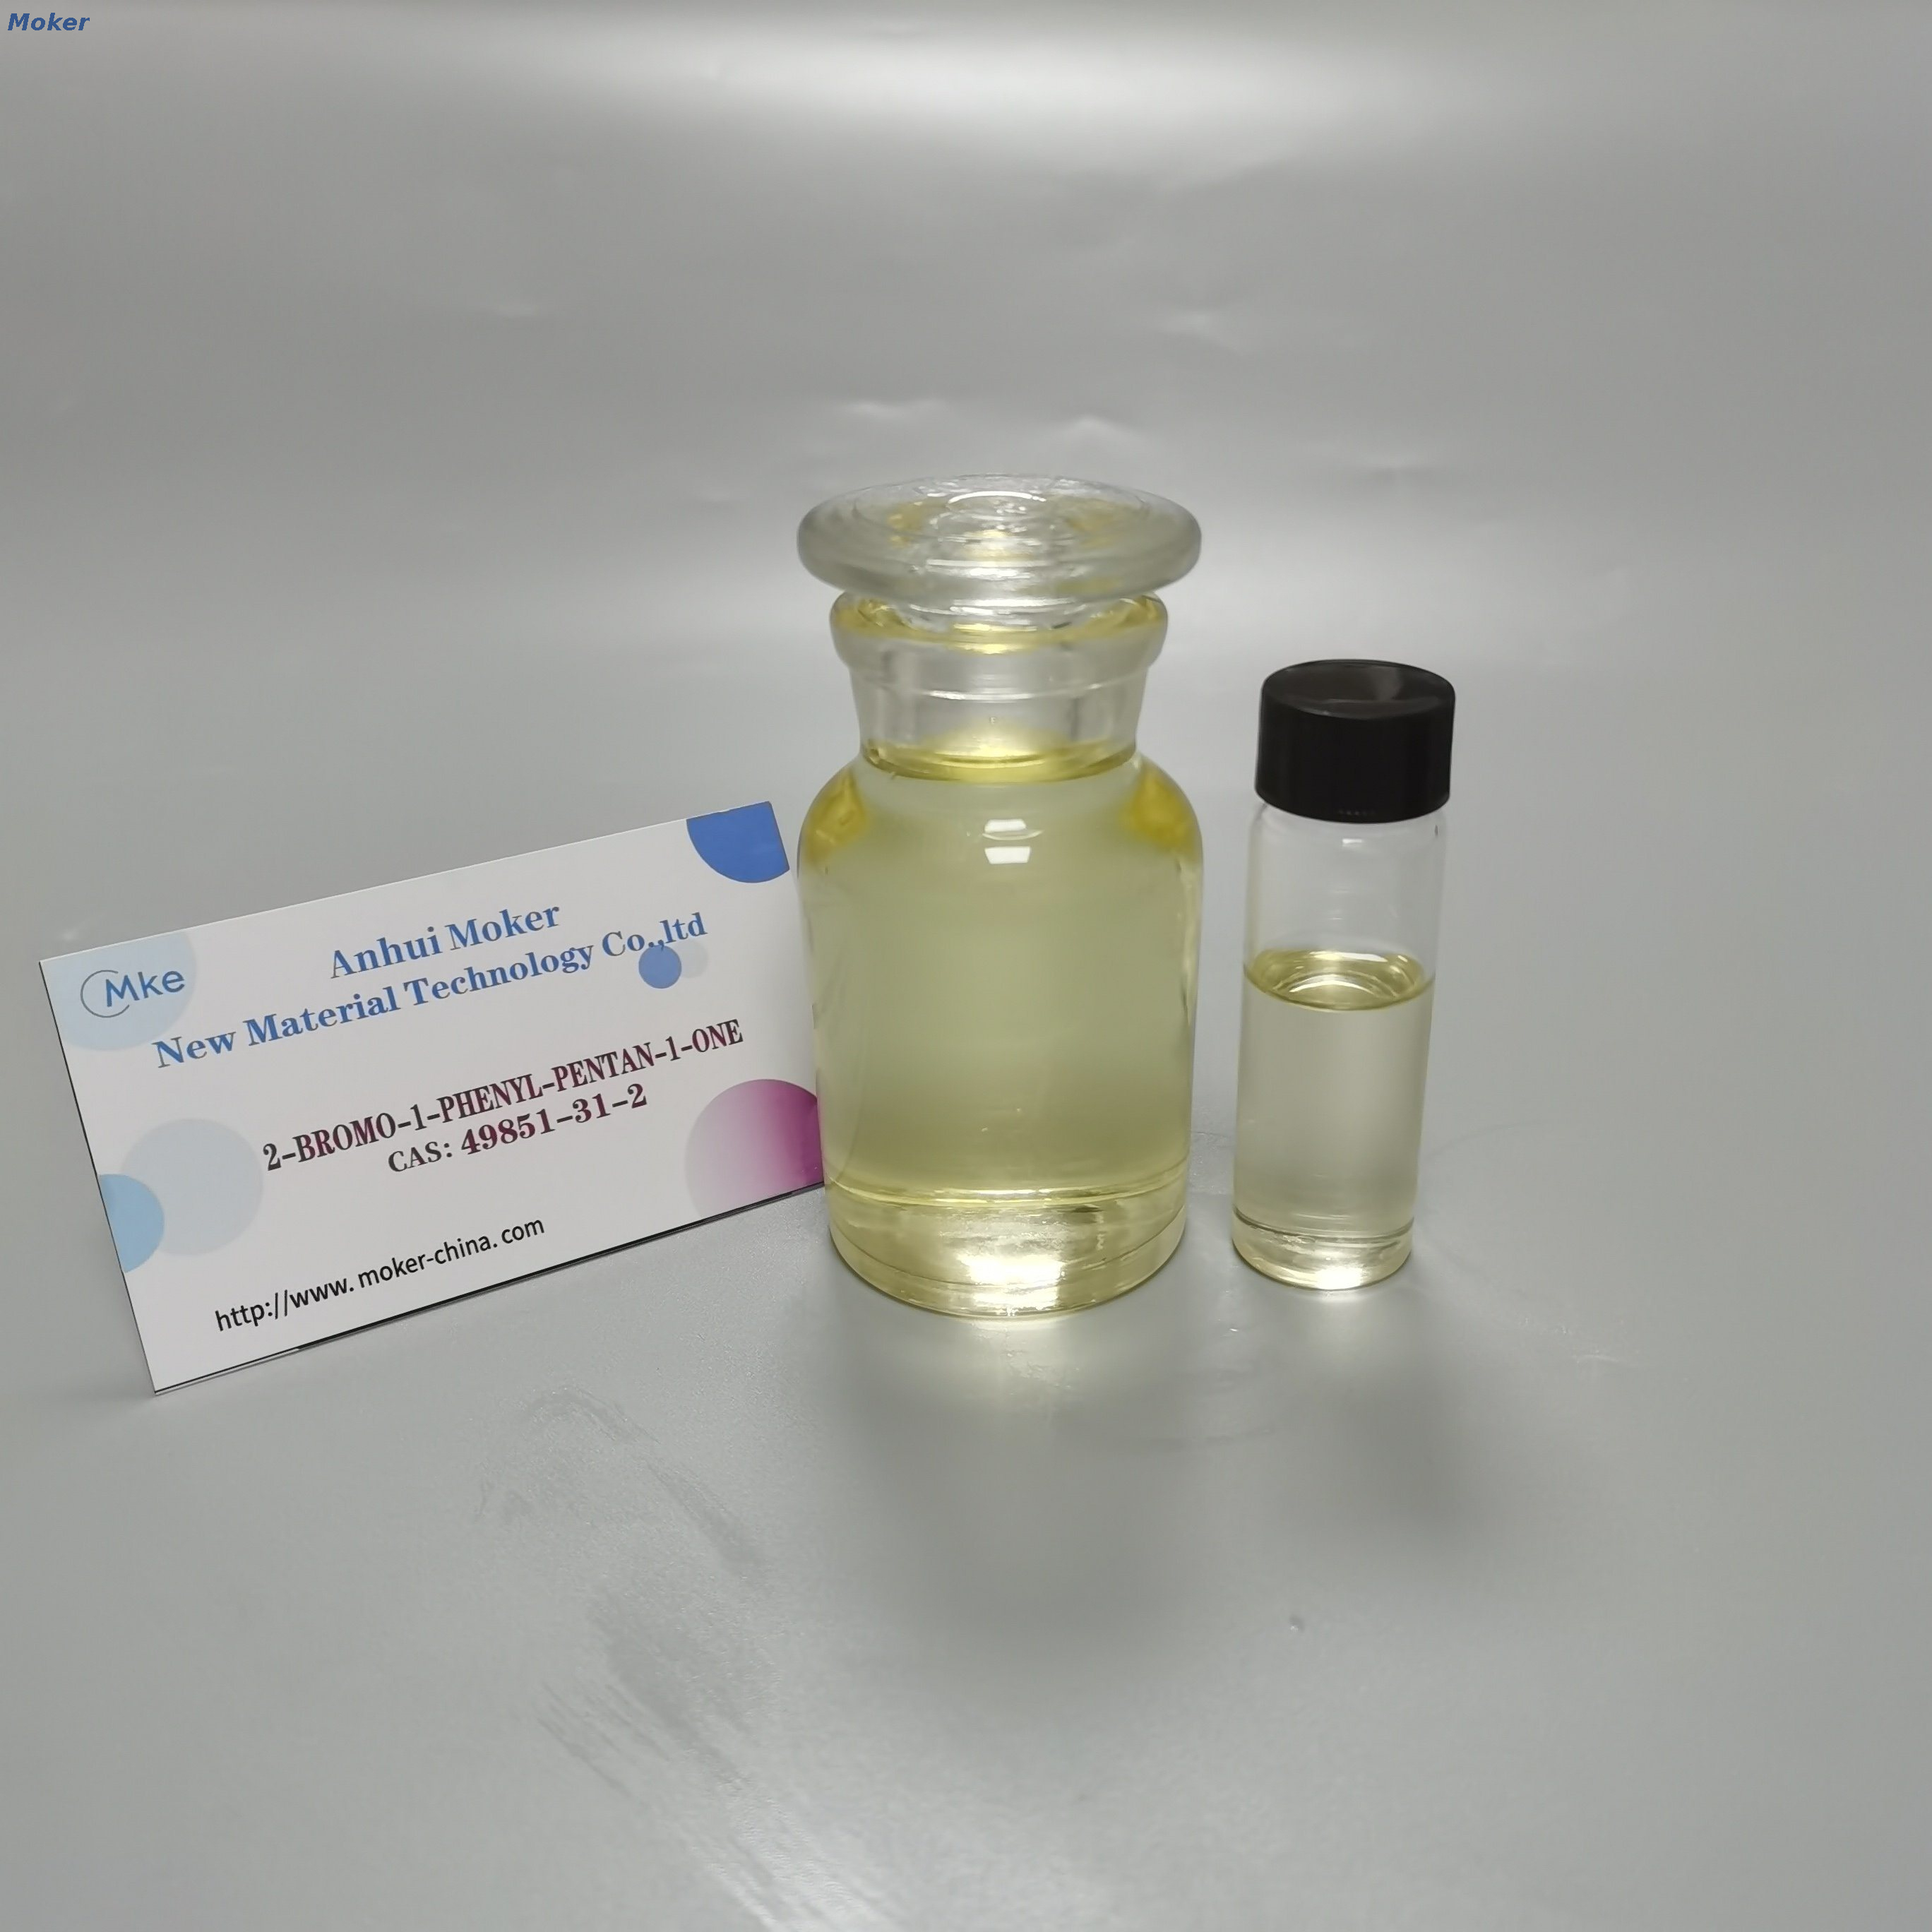 High Purity Α-Bromovalerophenone Pharmaceutical Intermediate CAS 49851-31-2 2-Bromo-1-phenyl-1-pentanone with Factory Price